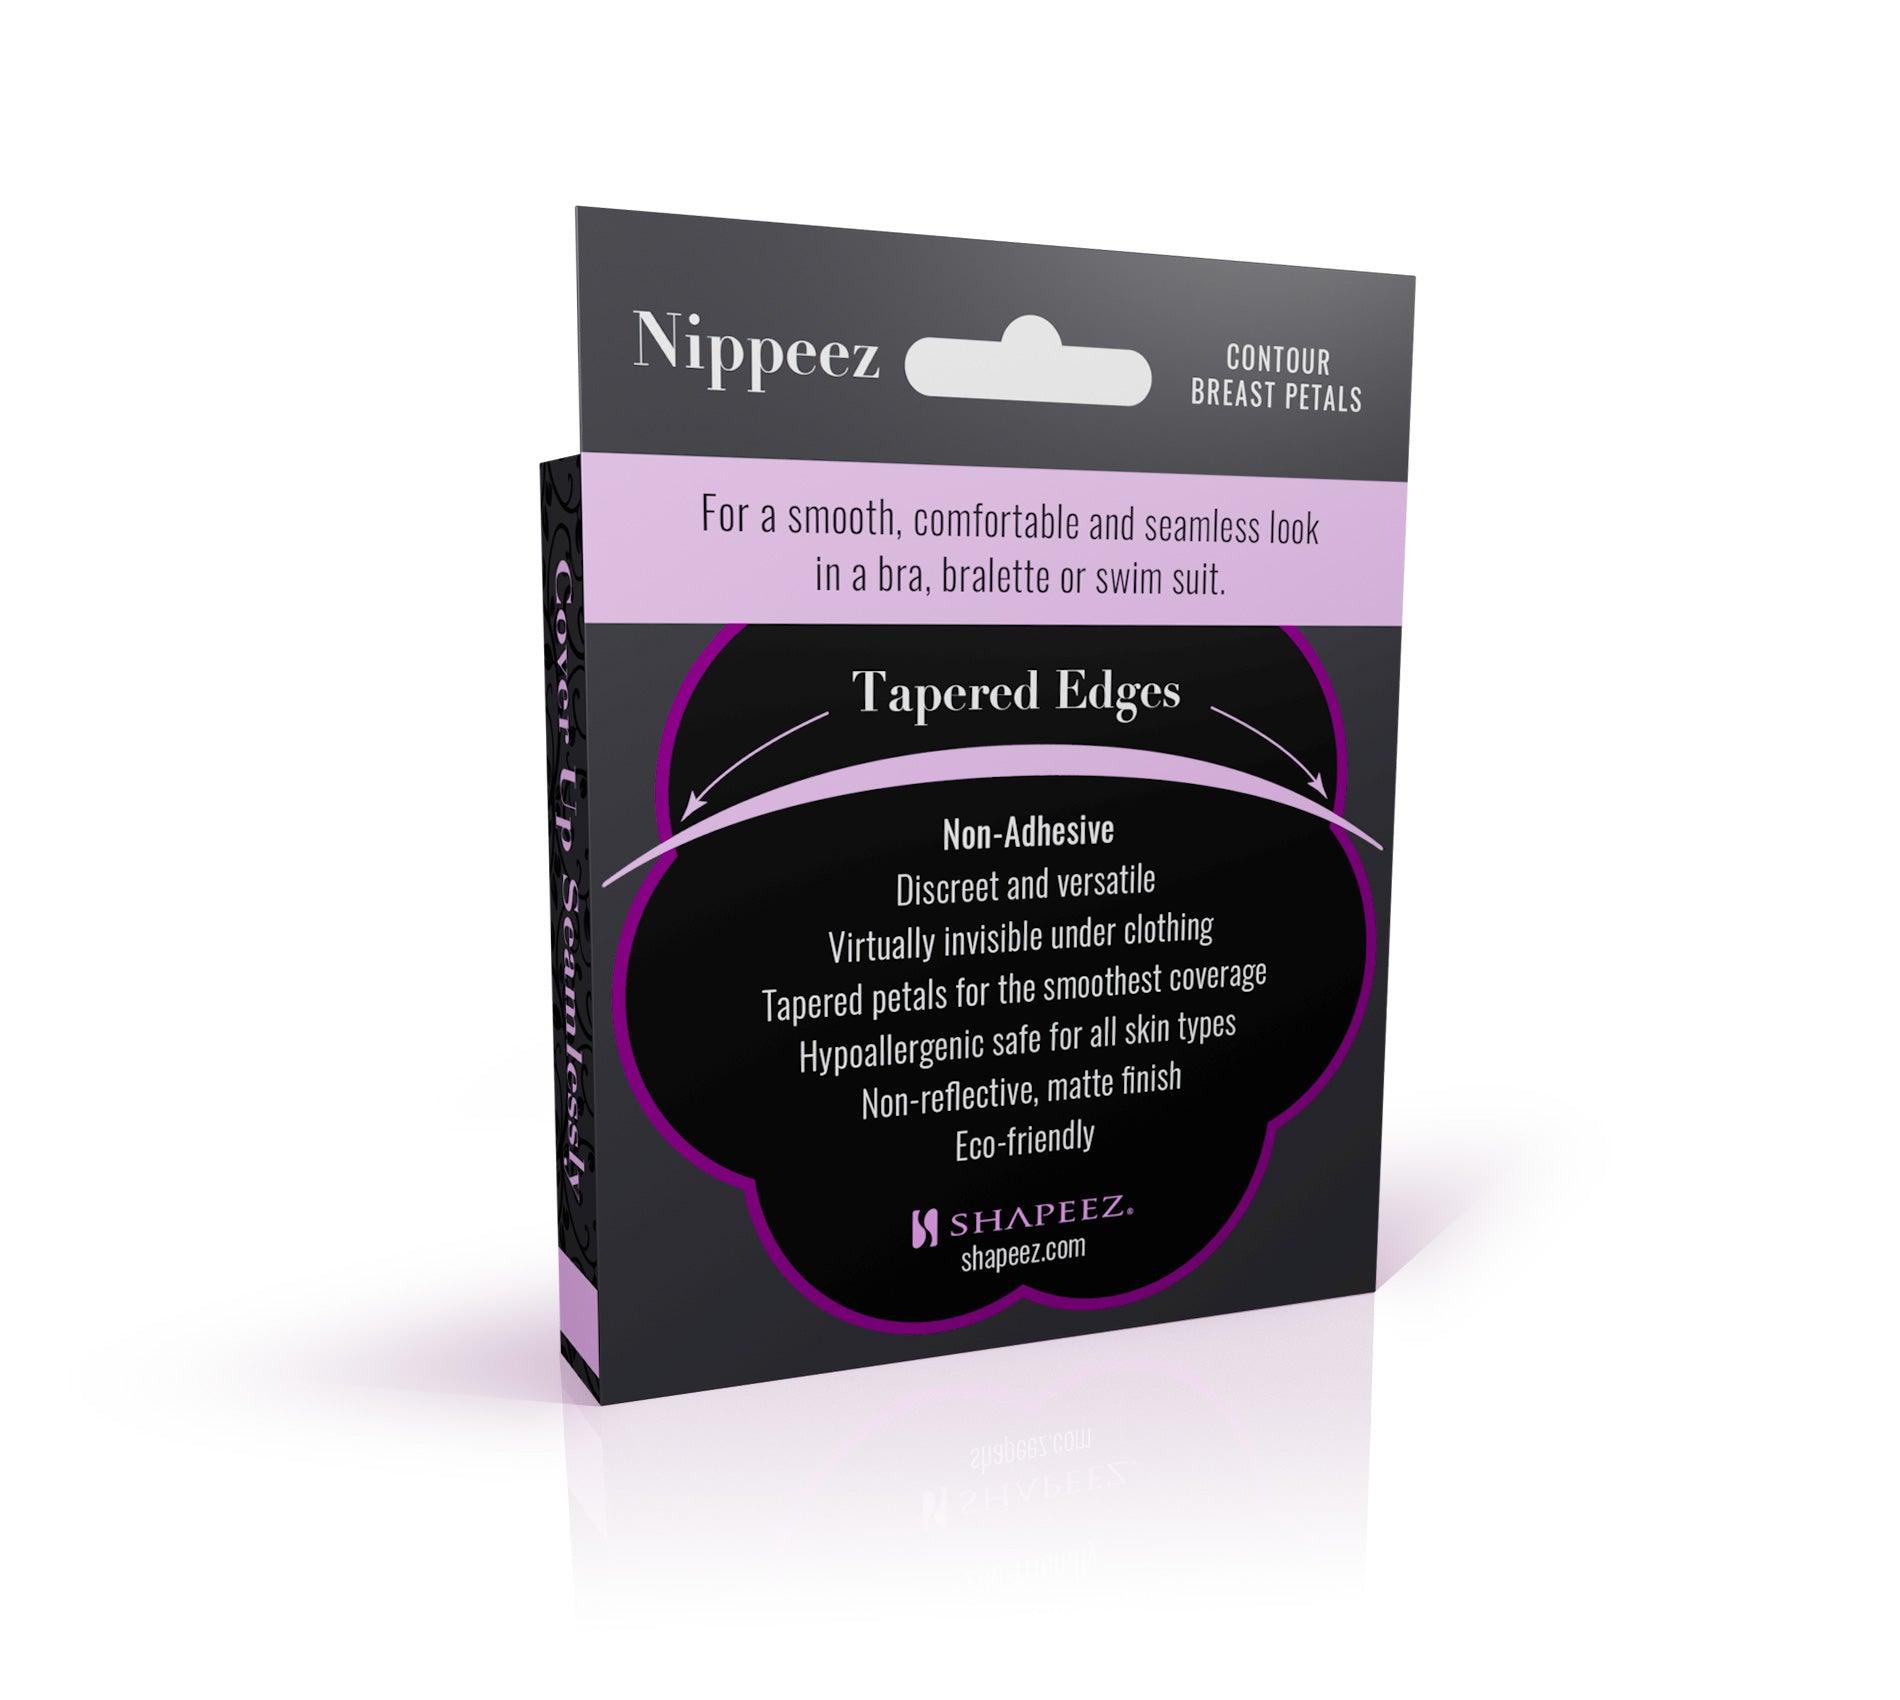 Nipple Cover Adhesive Bra Breast Petals Reusable Silicone Pad 5